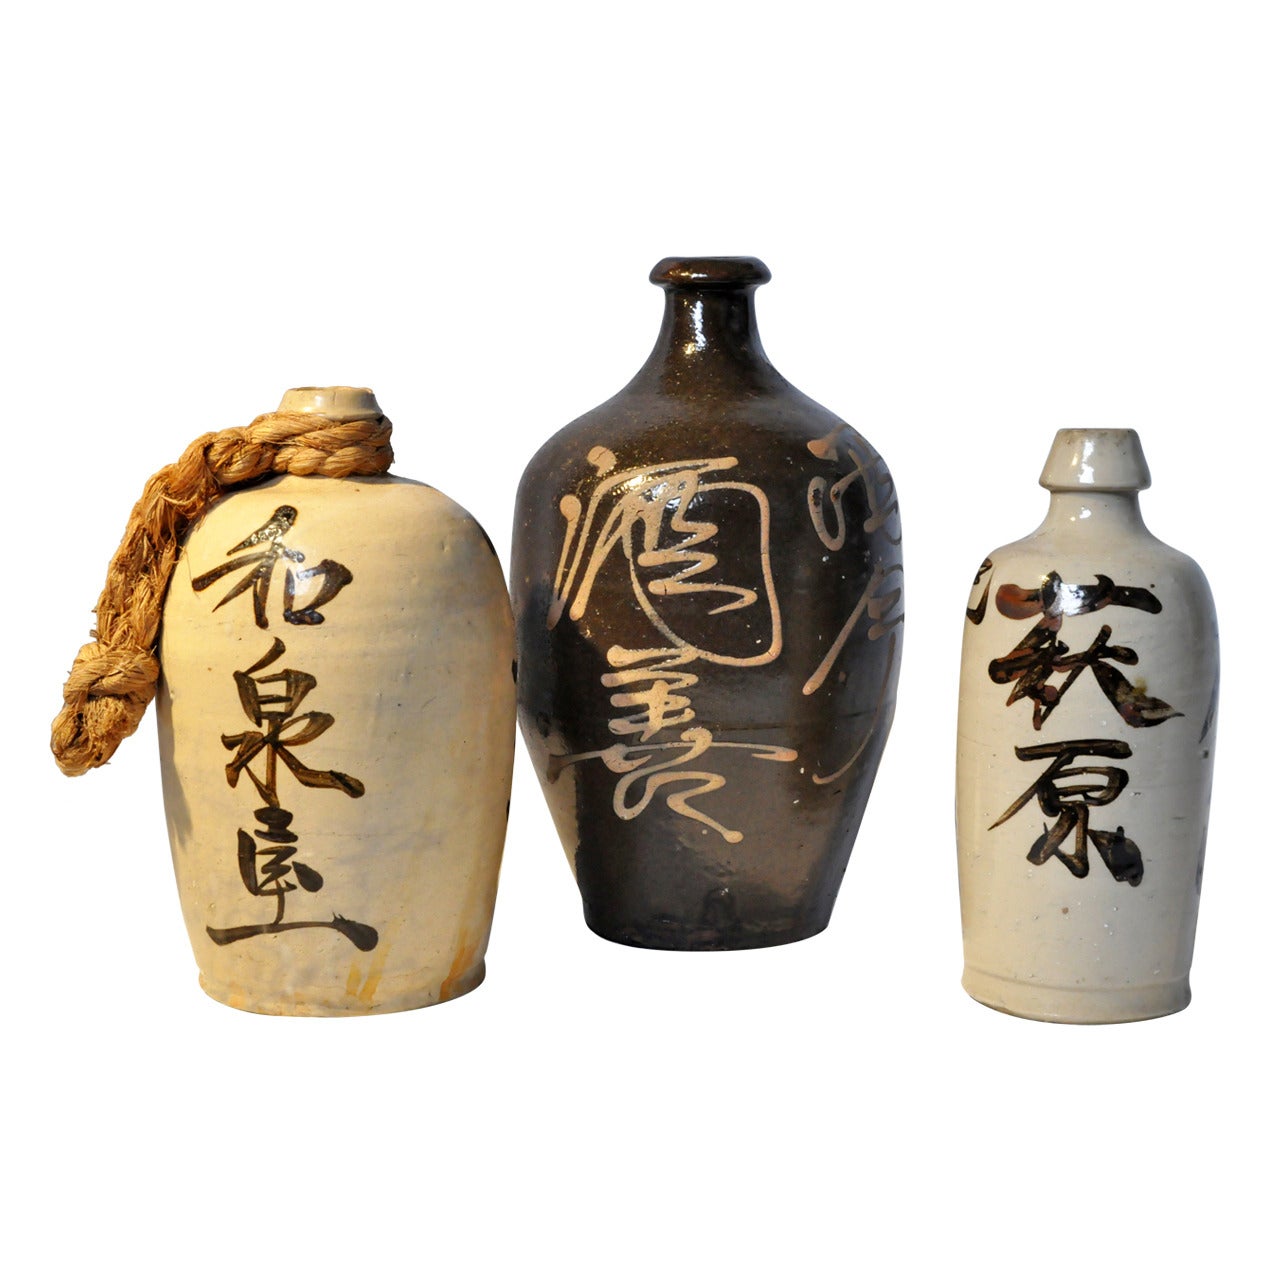 Group of Japanese Ceramic Sake Bottles